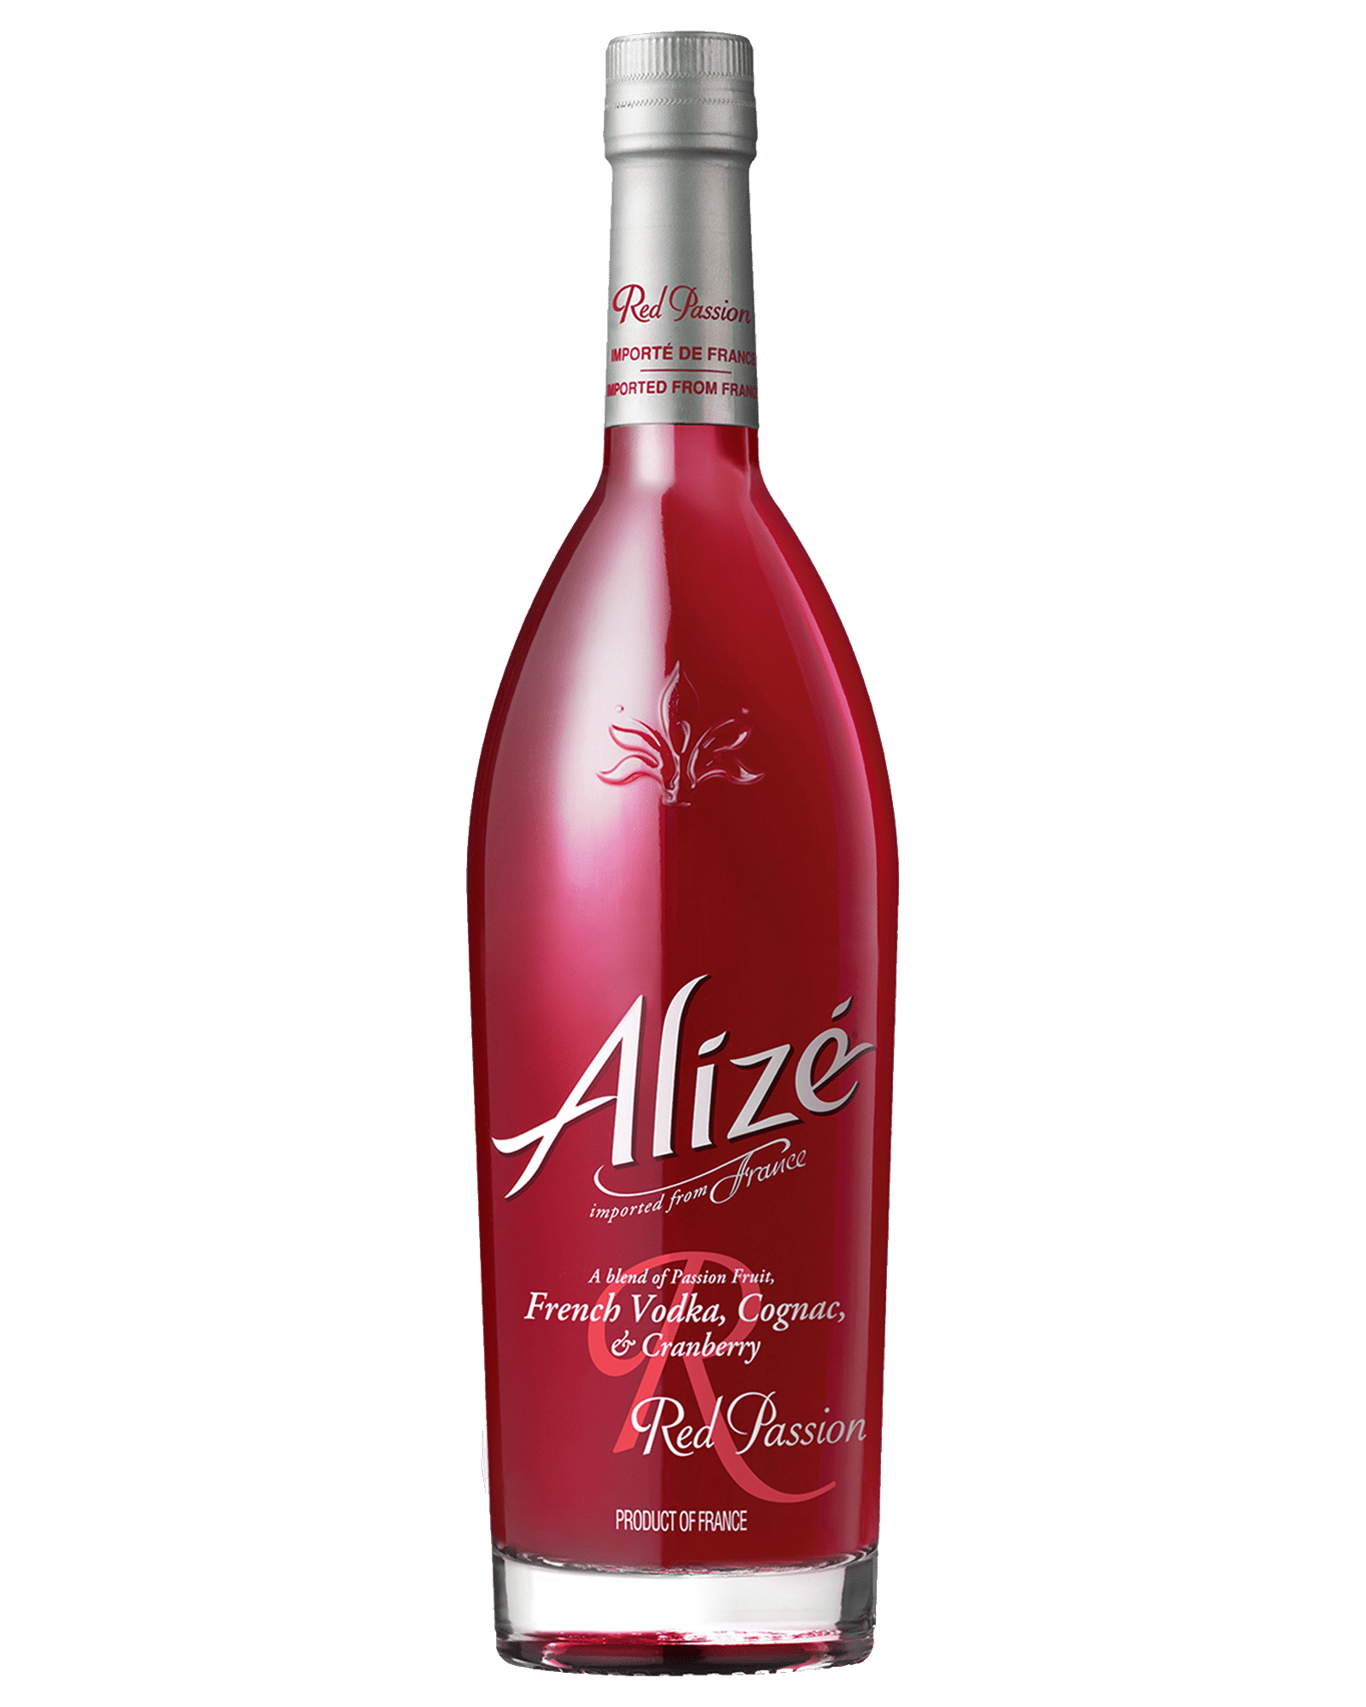 Buy Alizé Red Passion Liqueur 750ml Online Lowest Price Guarantee Best Deals Same Day 8207